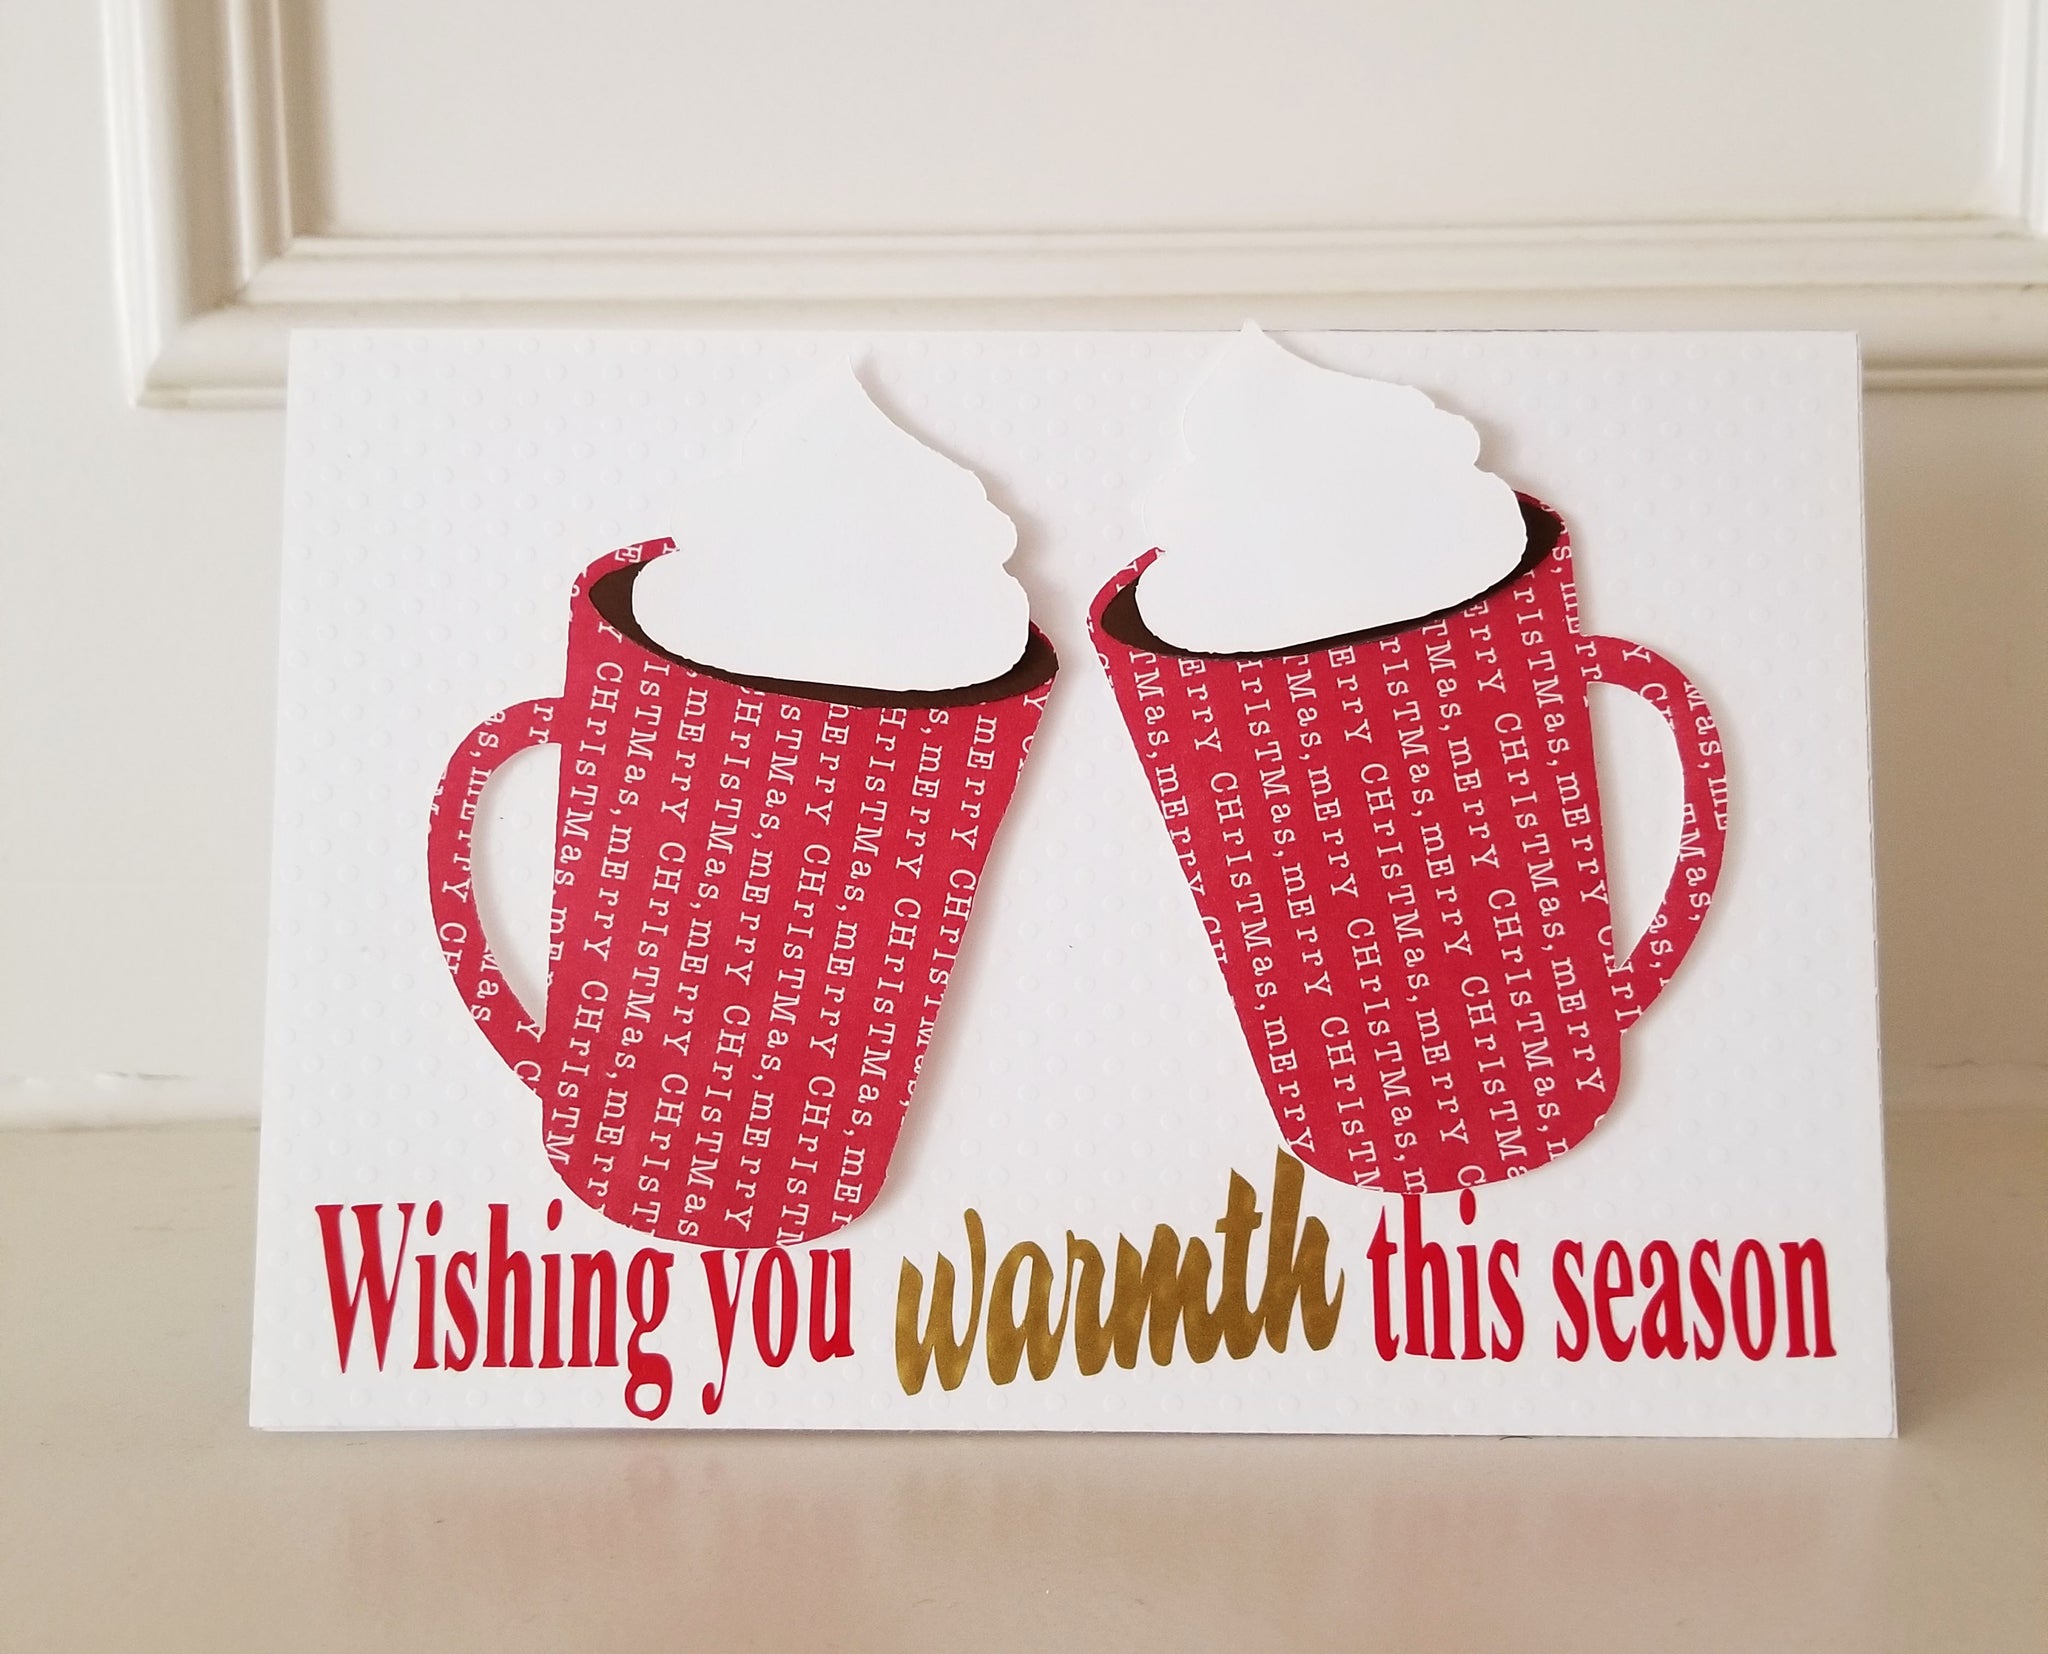 Wishing Warmth This Season Greeting Card